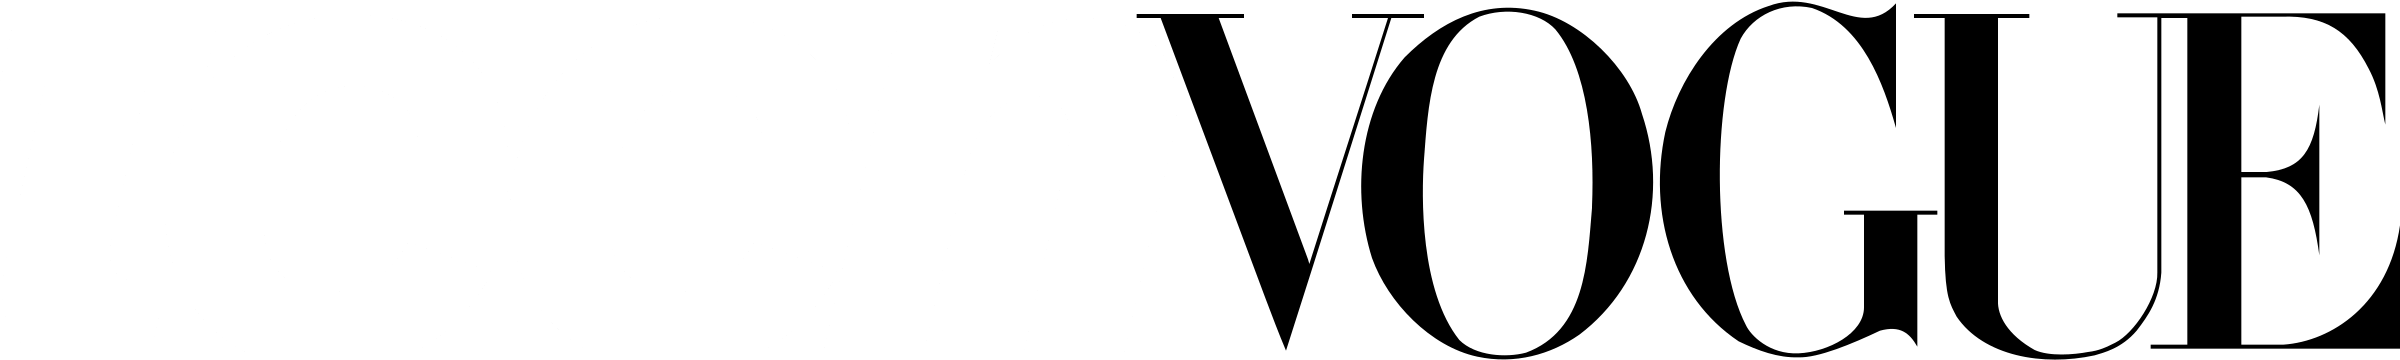 Vogue White Logo - TEEN Vogue Logo PNG Transparent & SVG Vector - Freebie Supply